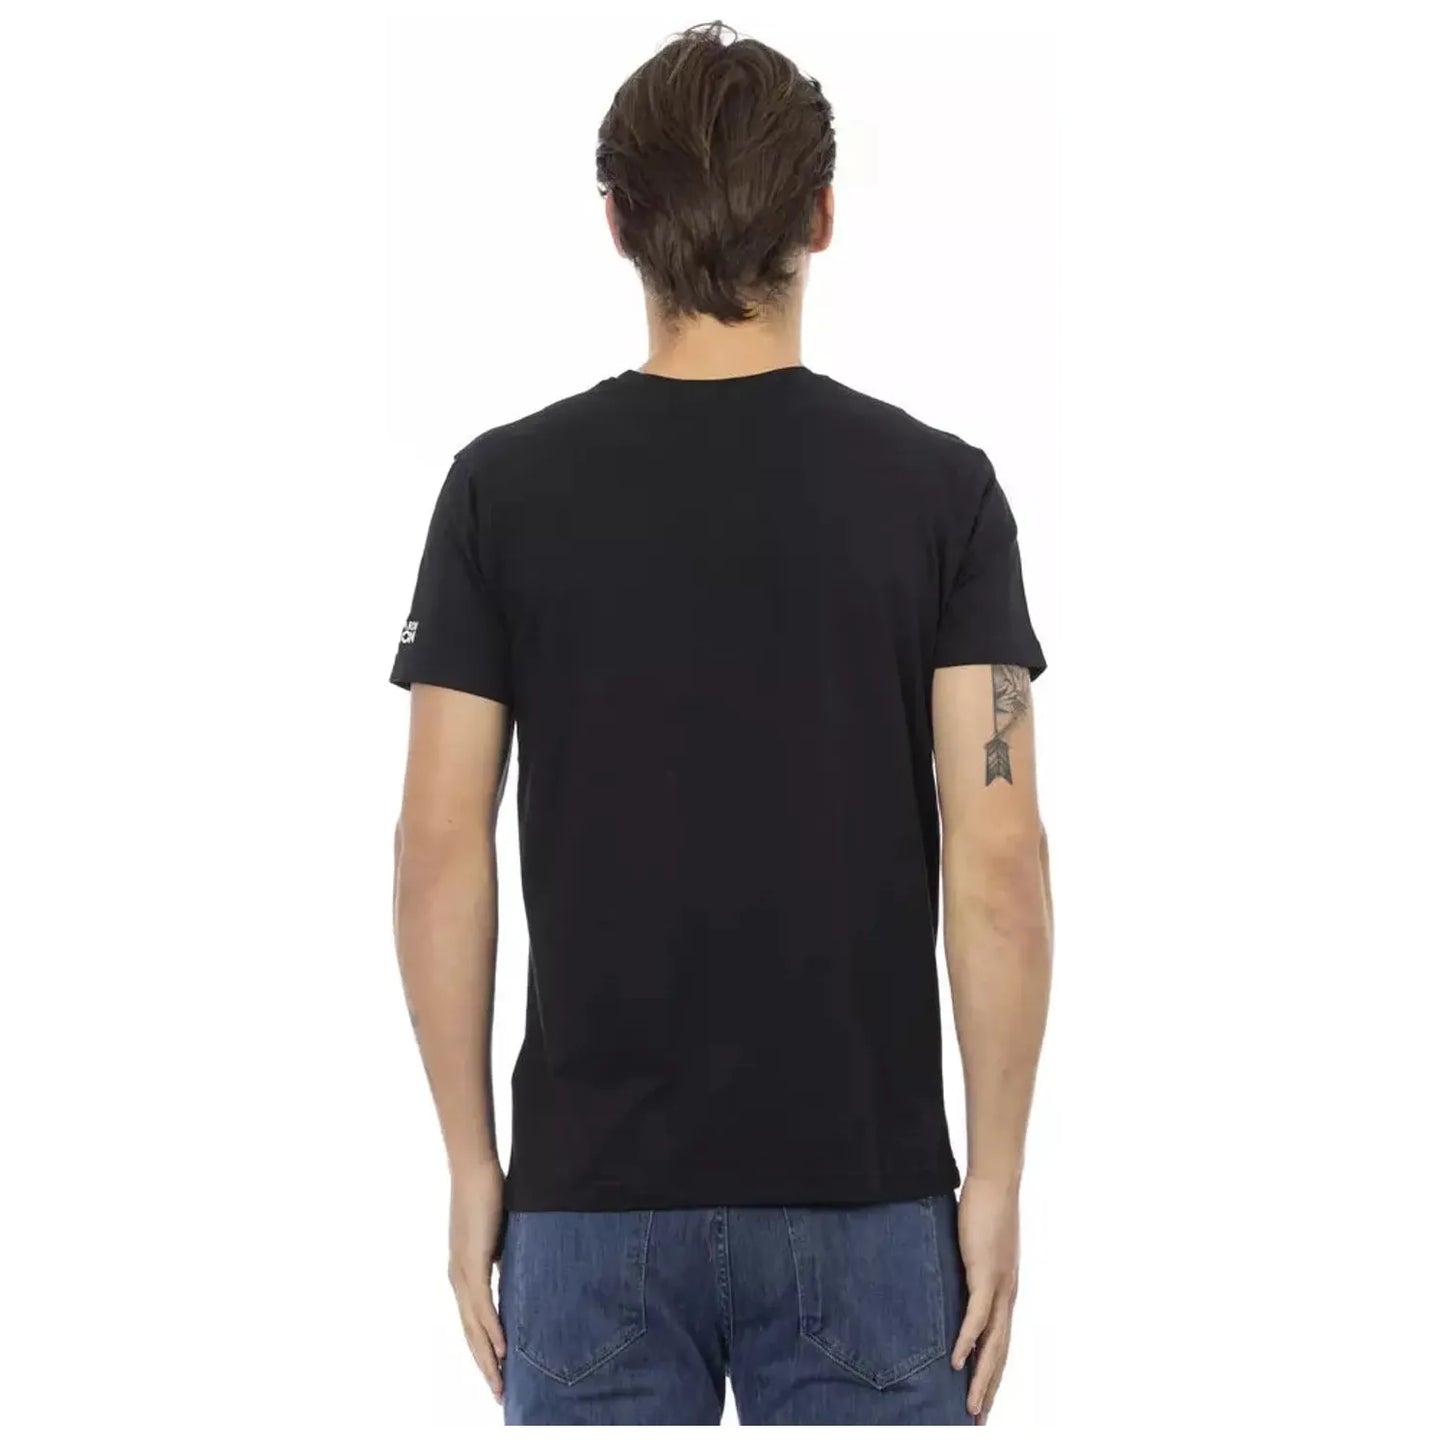 Trussardi Action Sleek V-Neck Tee with Front Print black-cotton-t-shirt-36